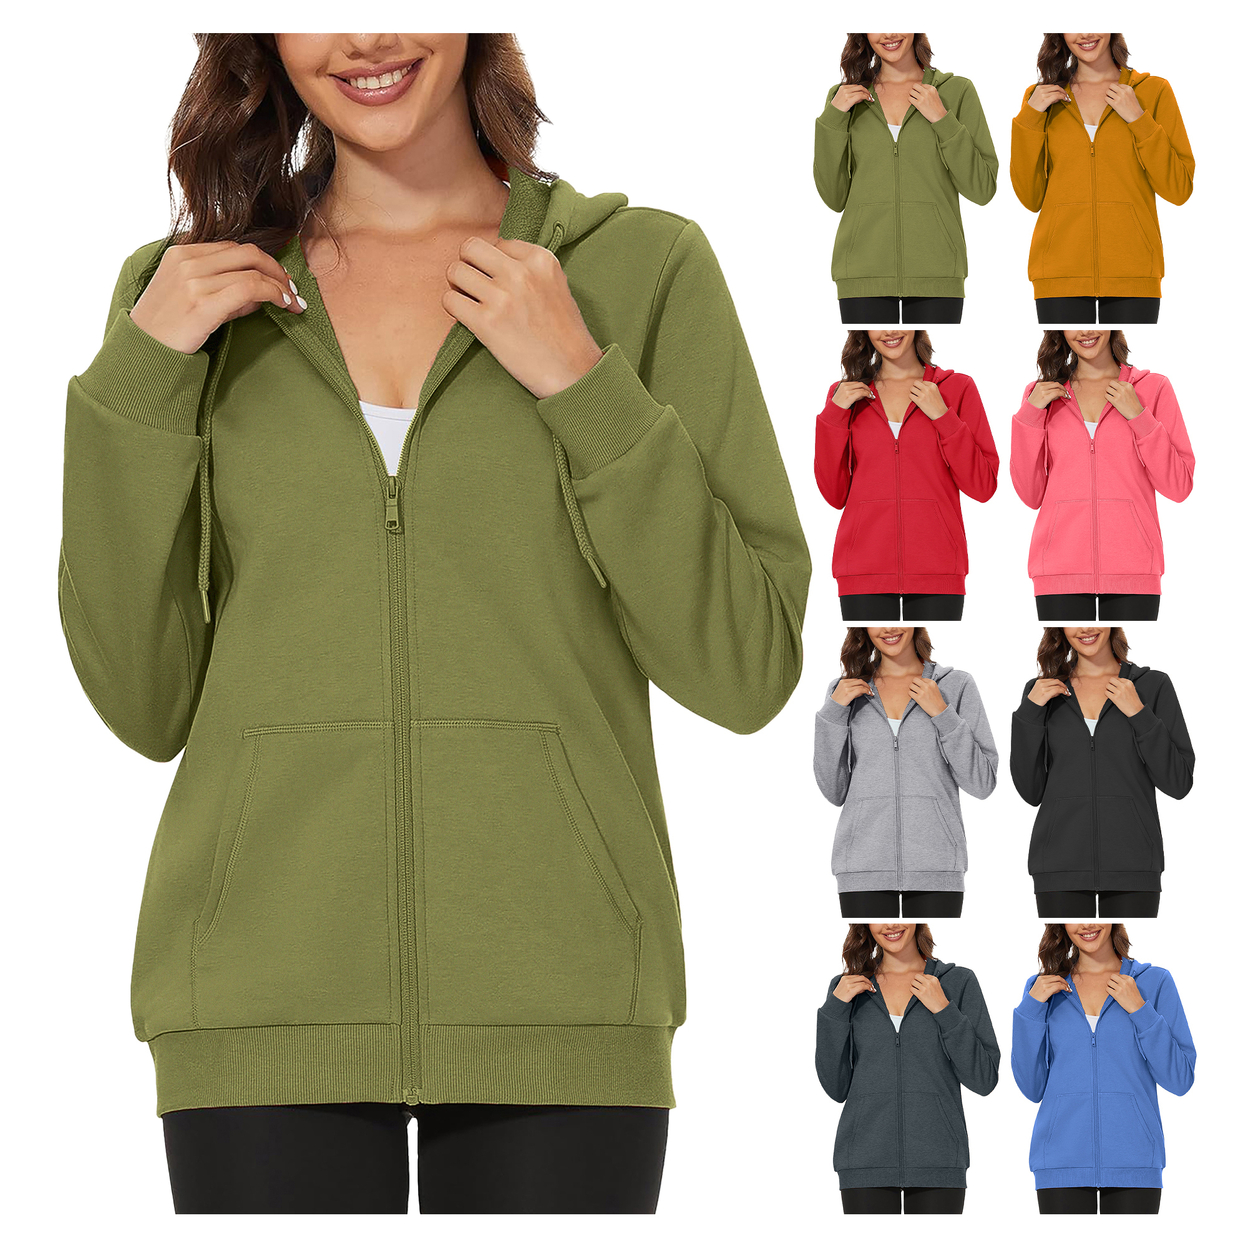 2-Pack: Women's Winter Warm Soft Blend Fleece Lined Full Zip Up Hoodie - Black & Grey, Medium